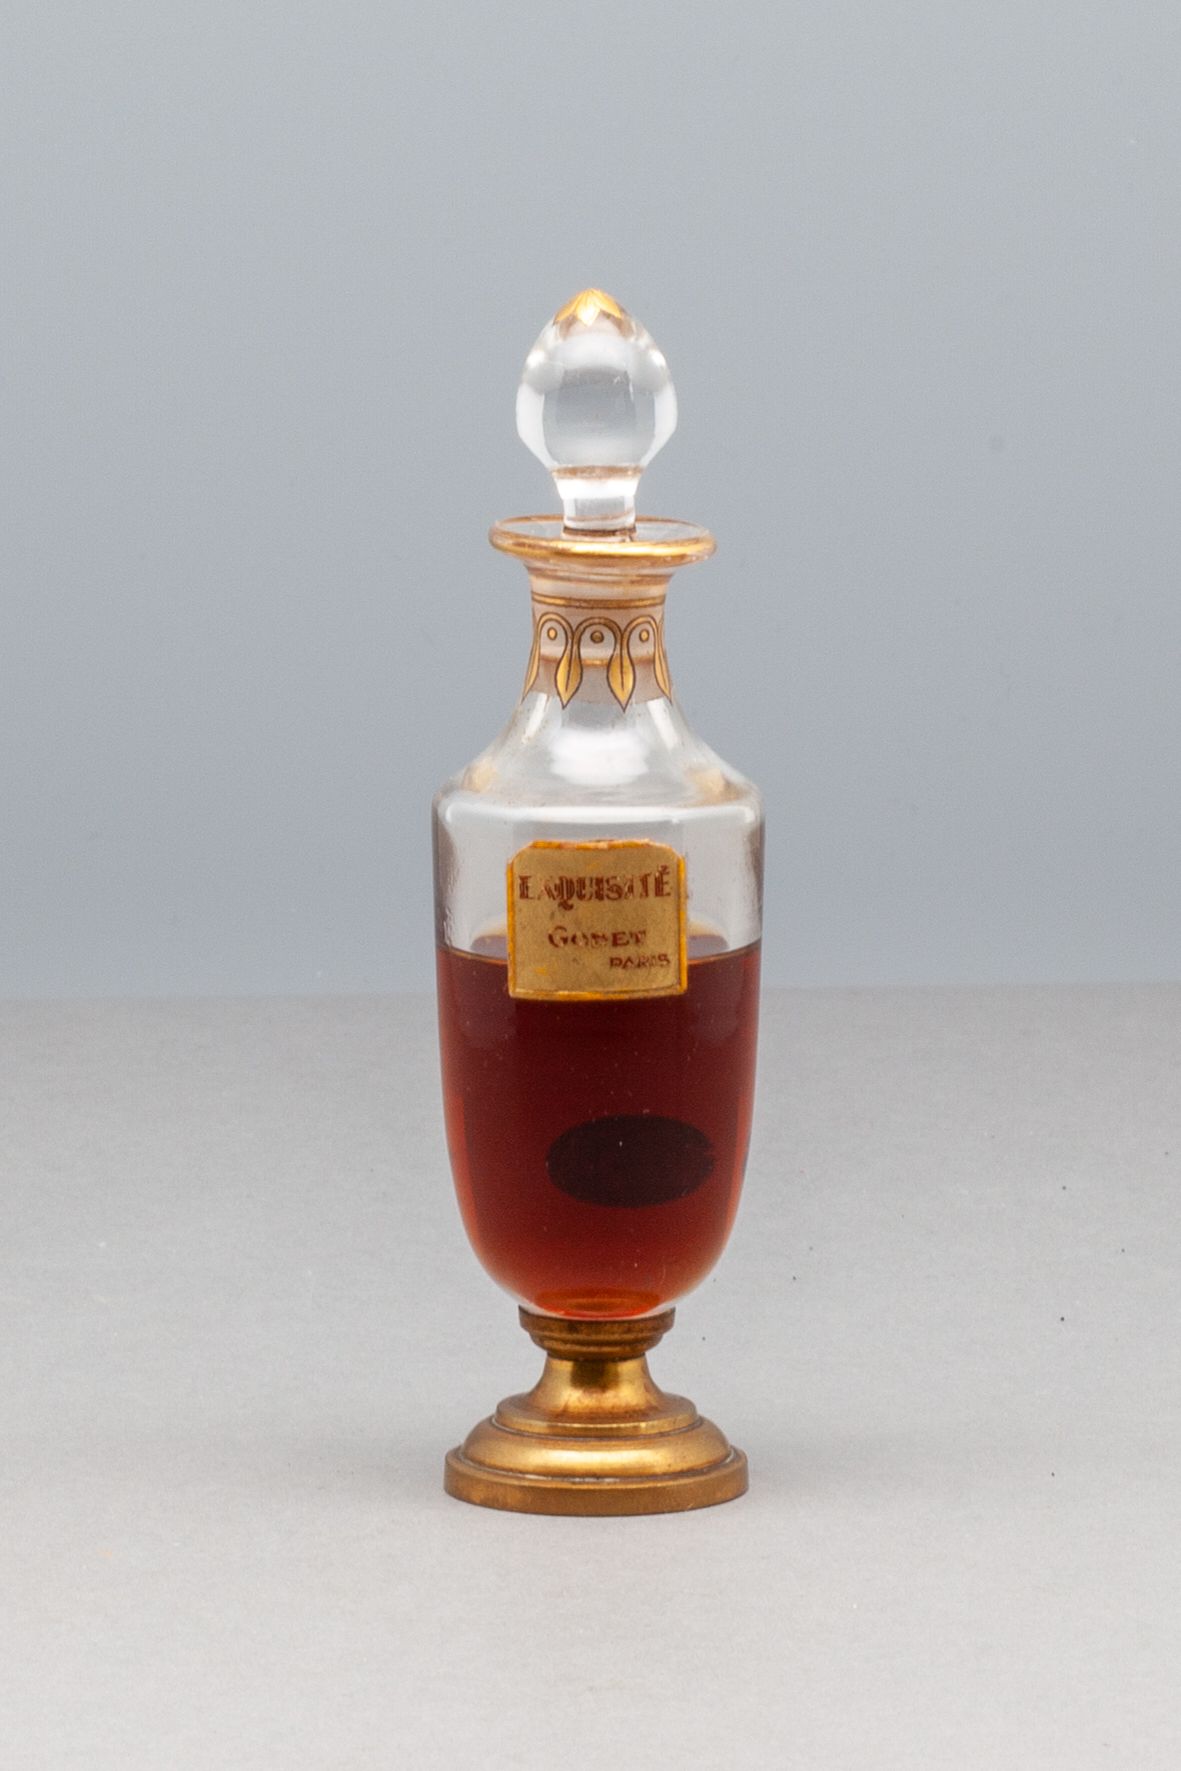 GODET "EXQUISITE" BACCARAT水晶瓶，有盖花瓶的形式。镀金的装饰。金属底座。题目是。高13,6厘米